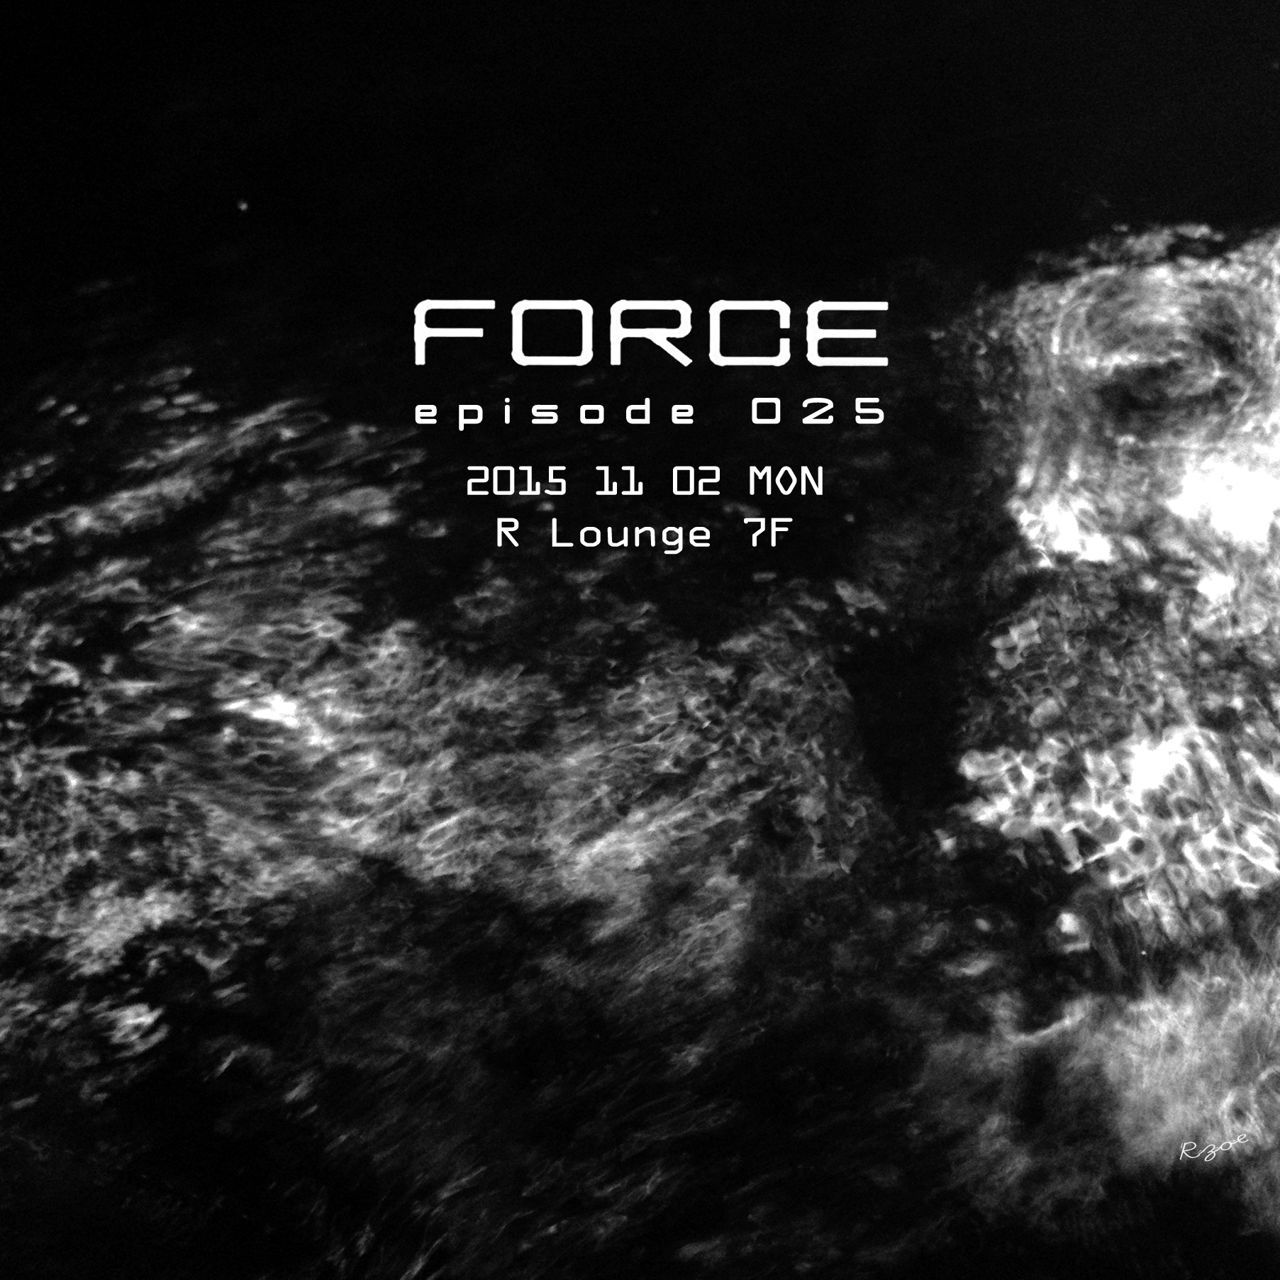 FORCE episode 025